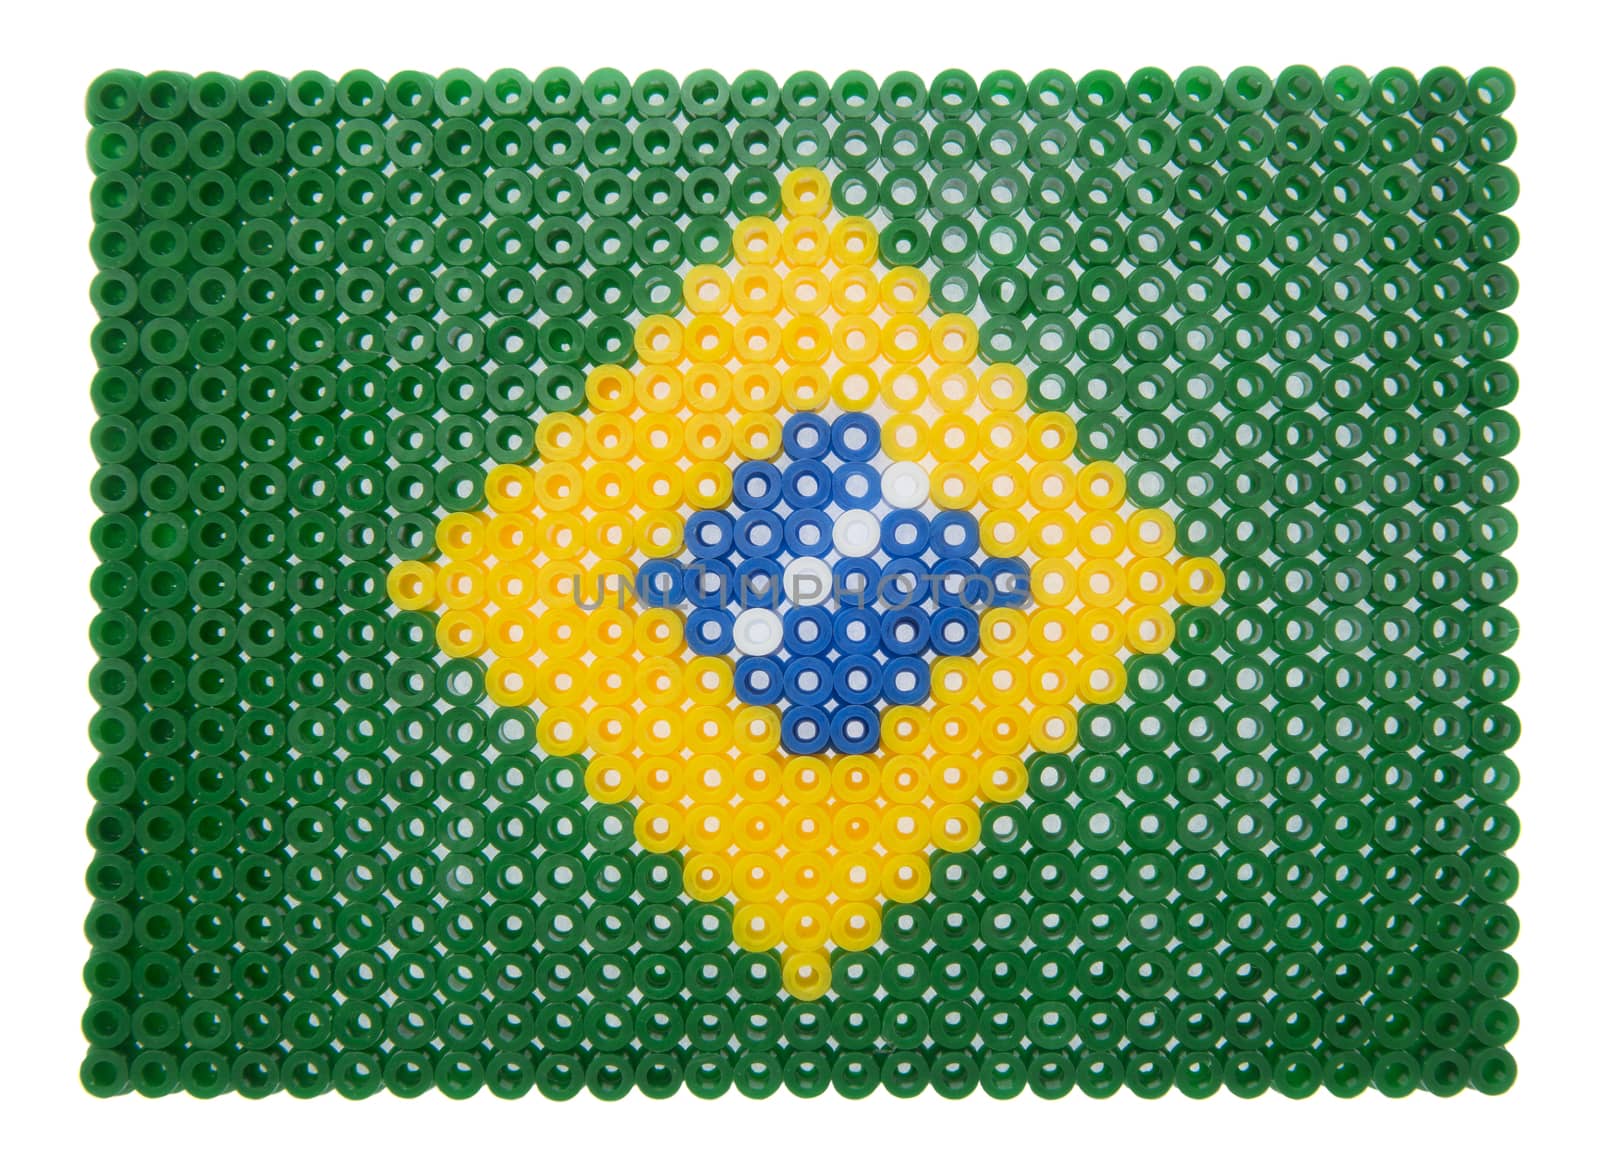 Brazilian Flag made of plastic pearls